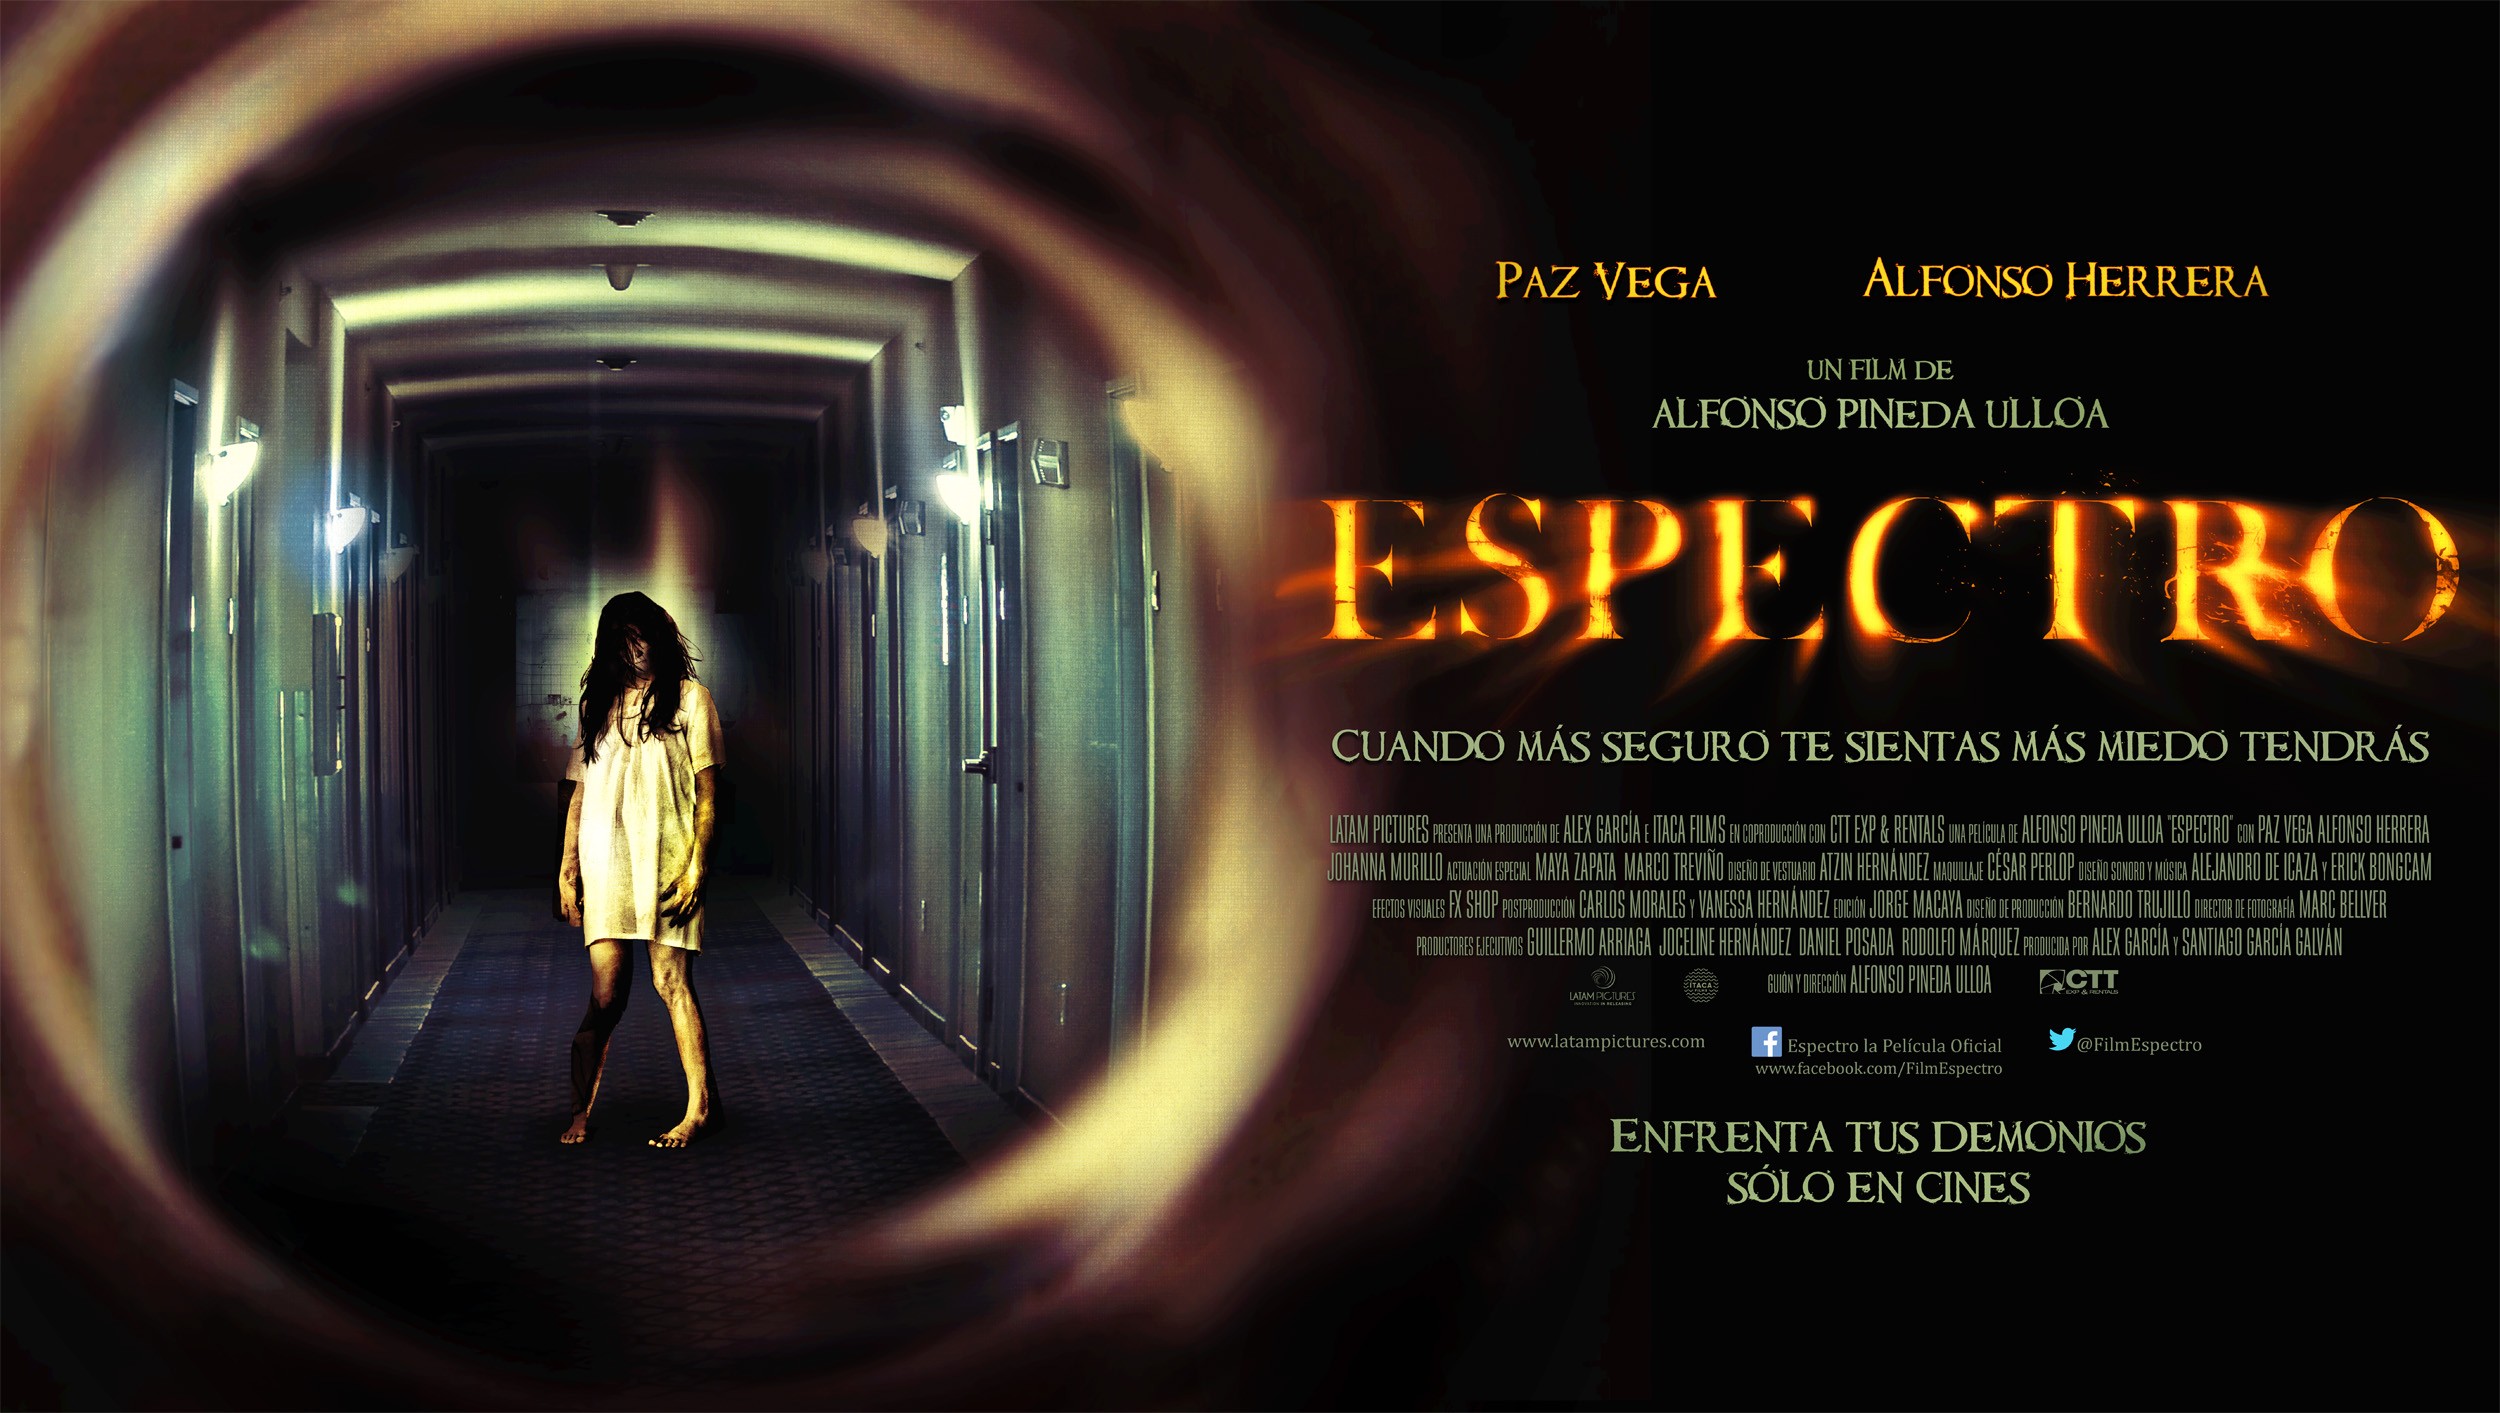 Mega Sized Movie Poster Image for Espectro (#2 of 2)